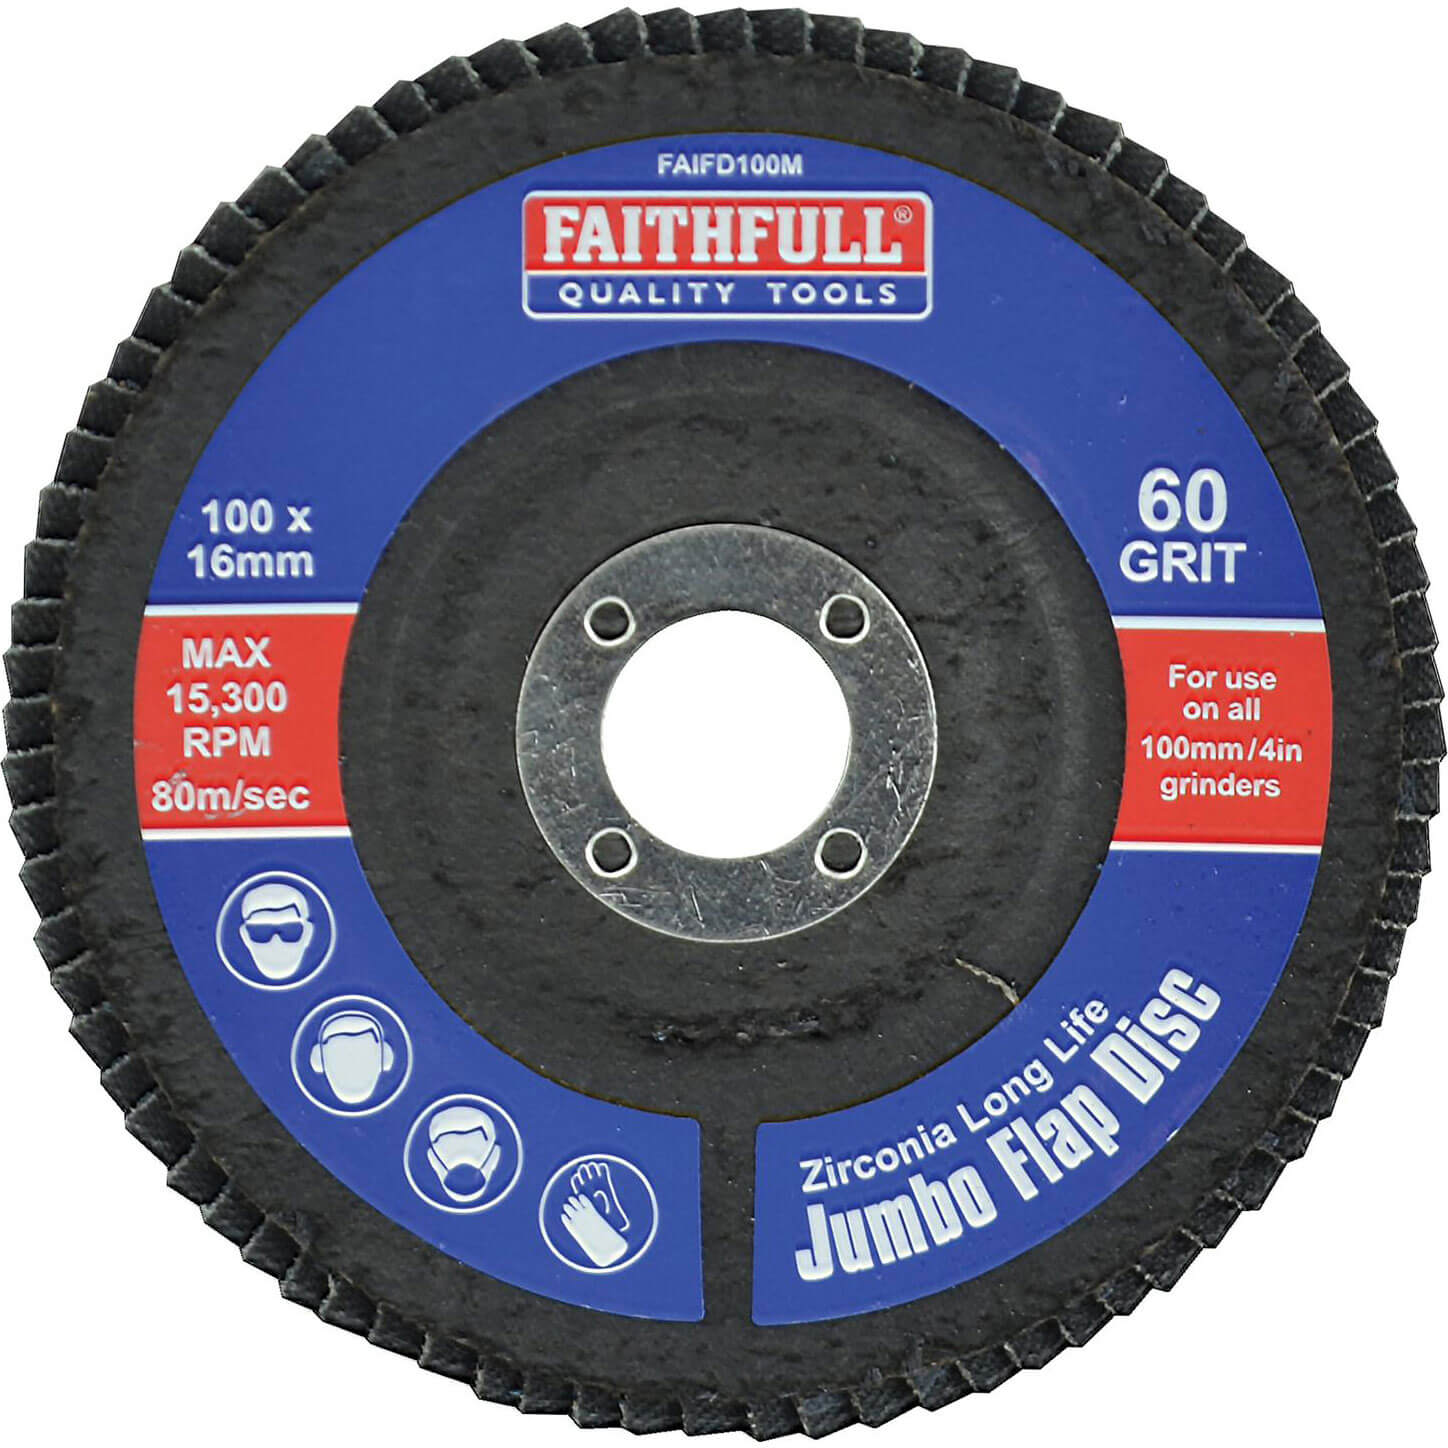 Photo of Faithfull Zirconium Abrasive Flap Disc 100mm Medium